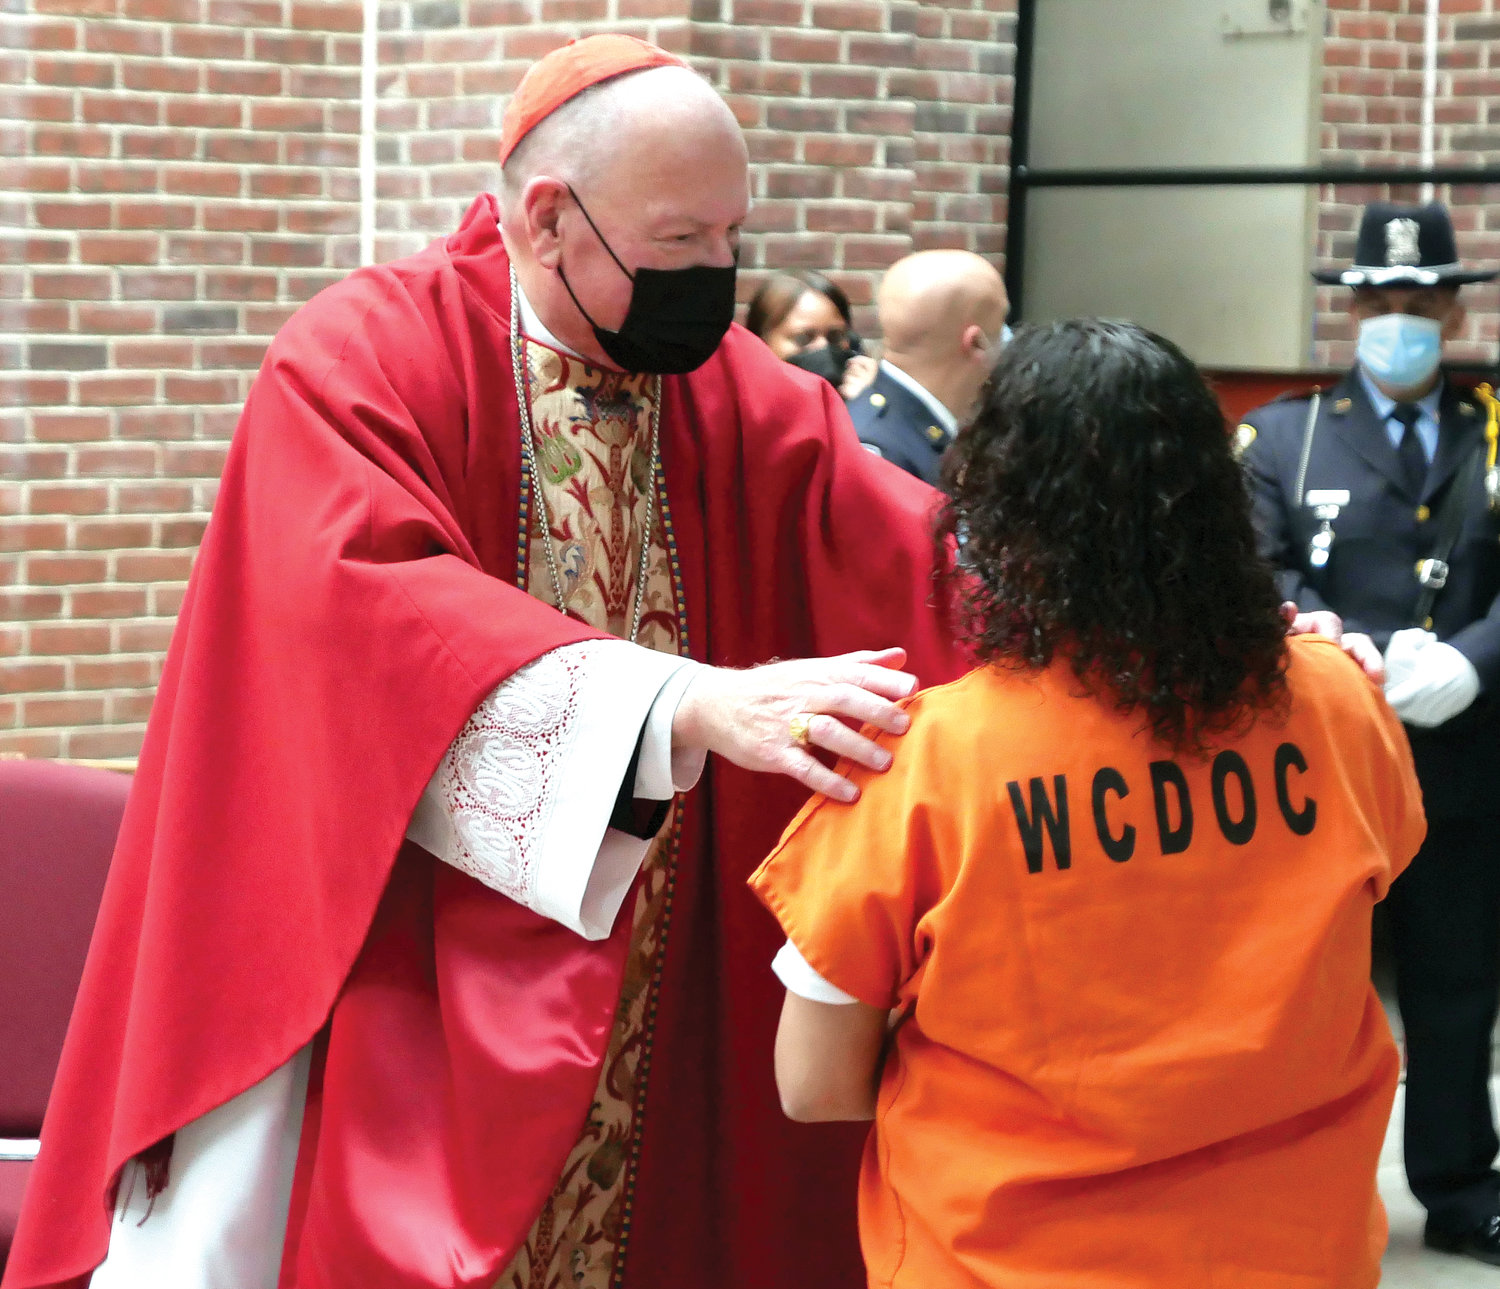 The cardinal greets a prisoner.